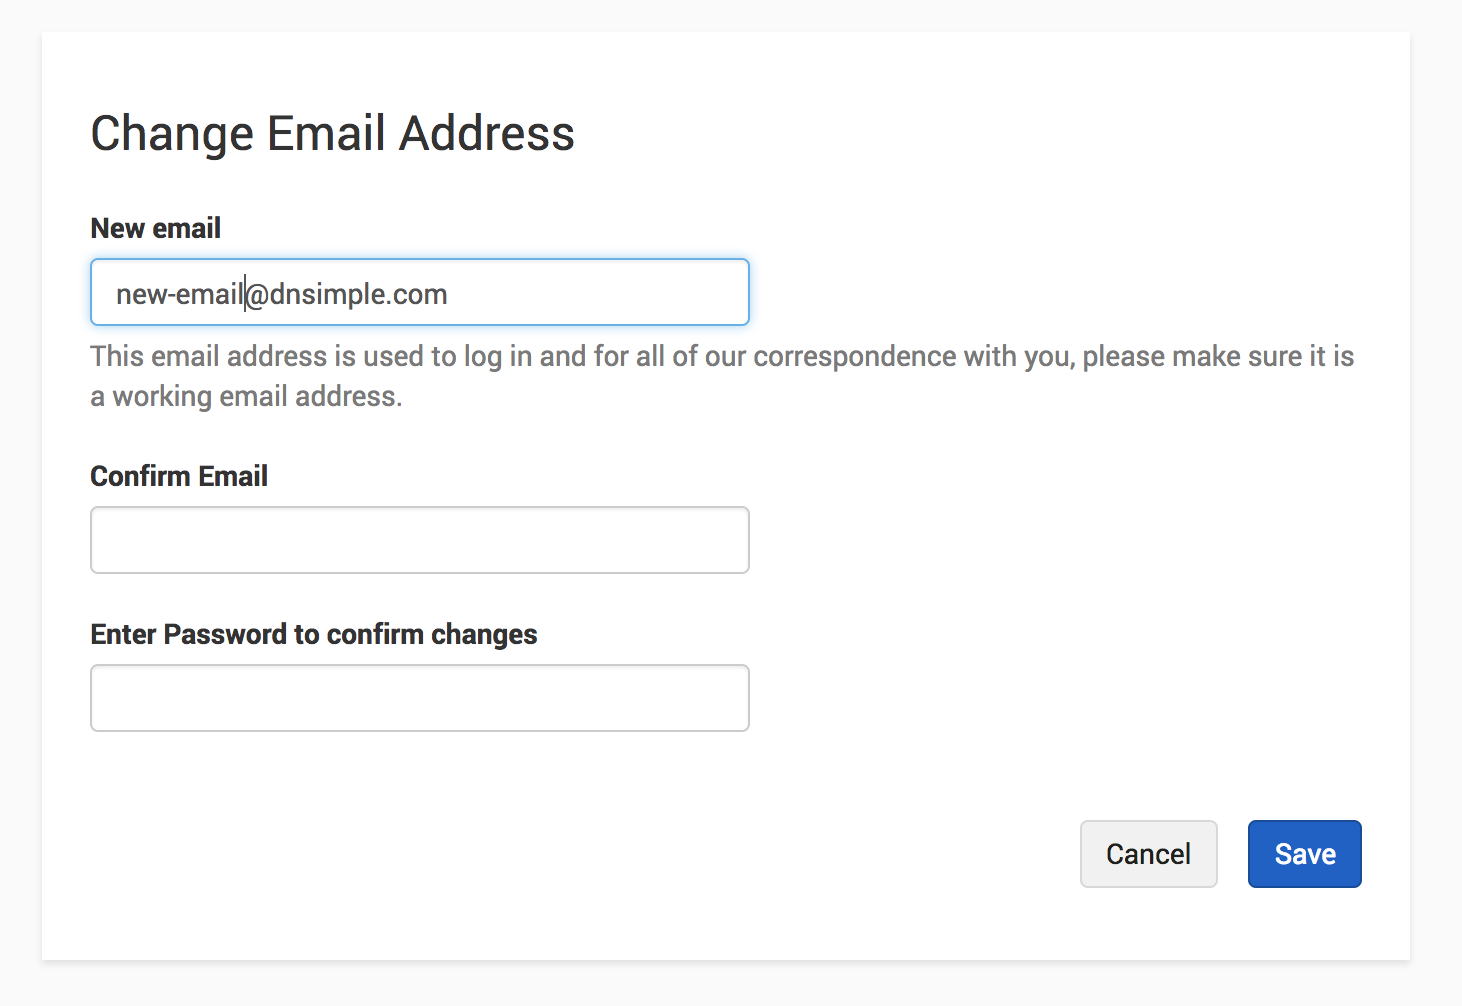 Enter email address